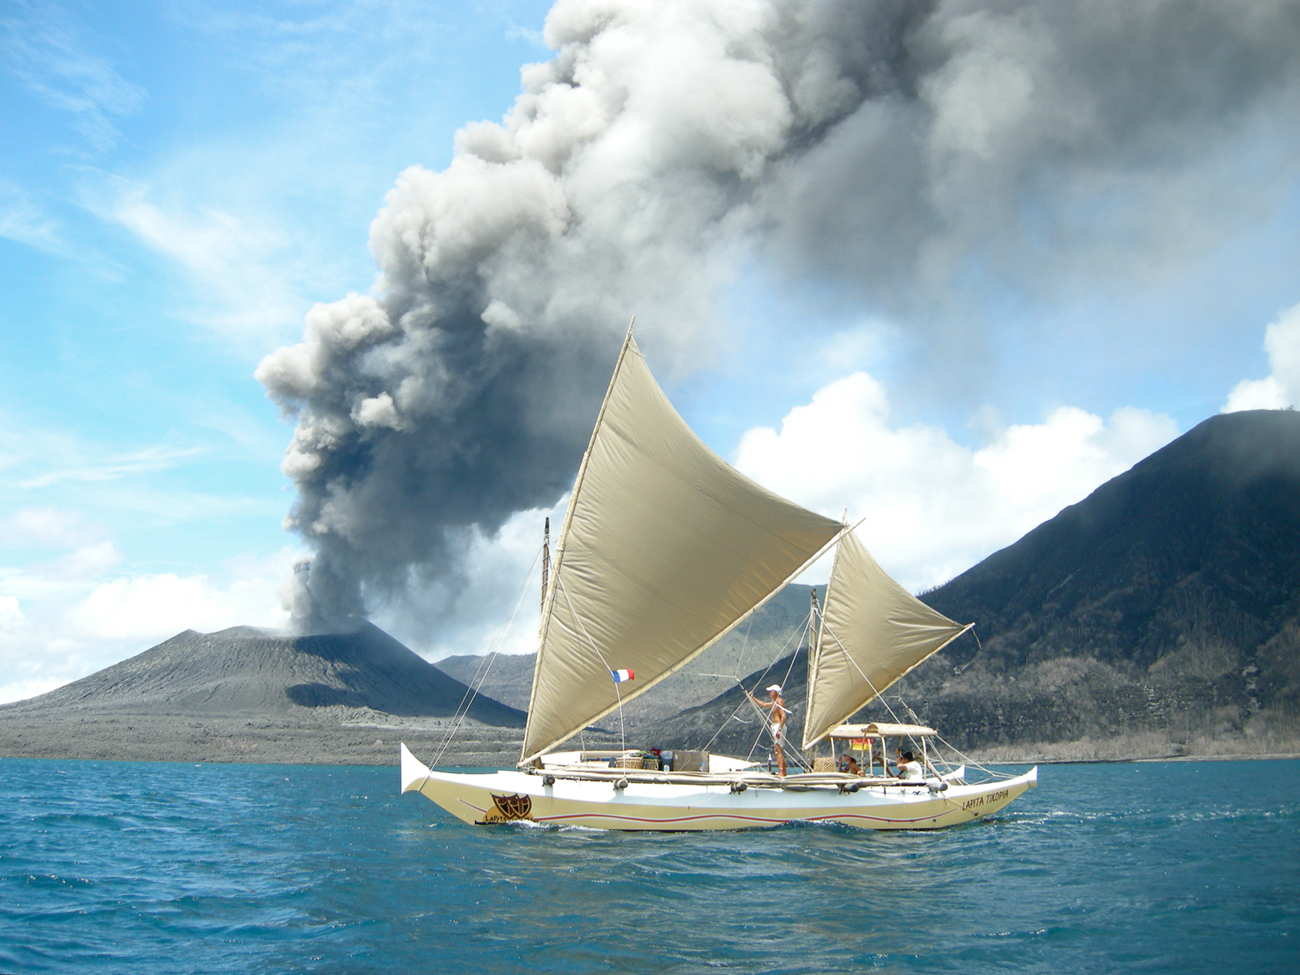 Tama Moana sailing past a smoking volcano